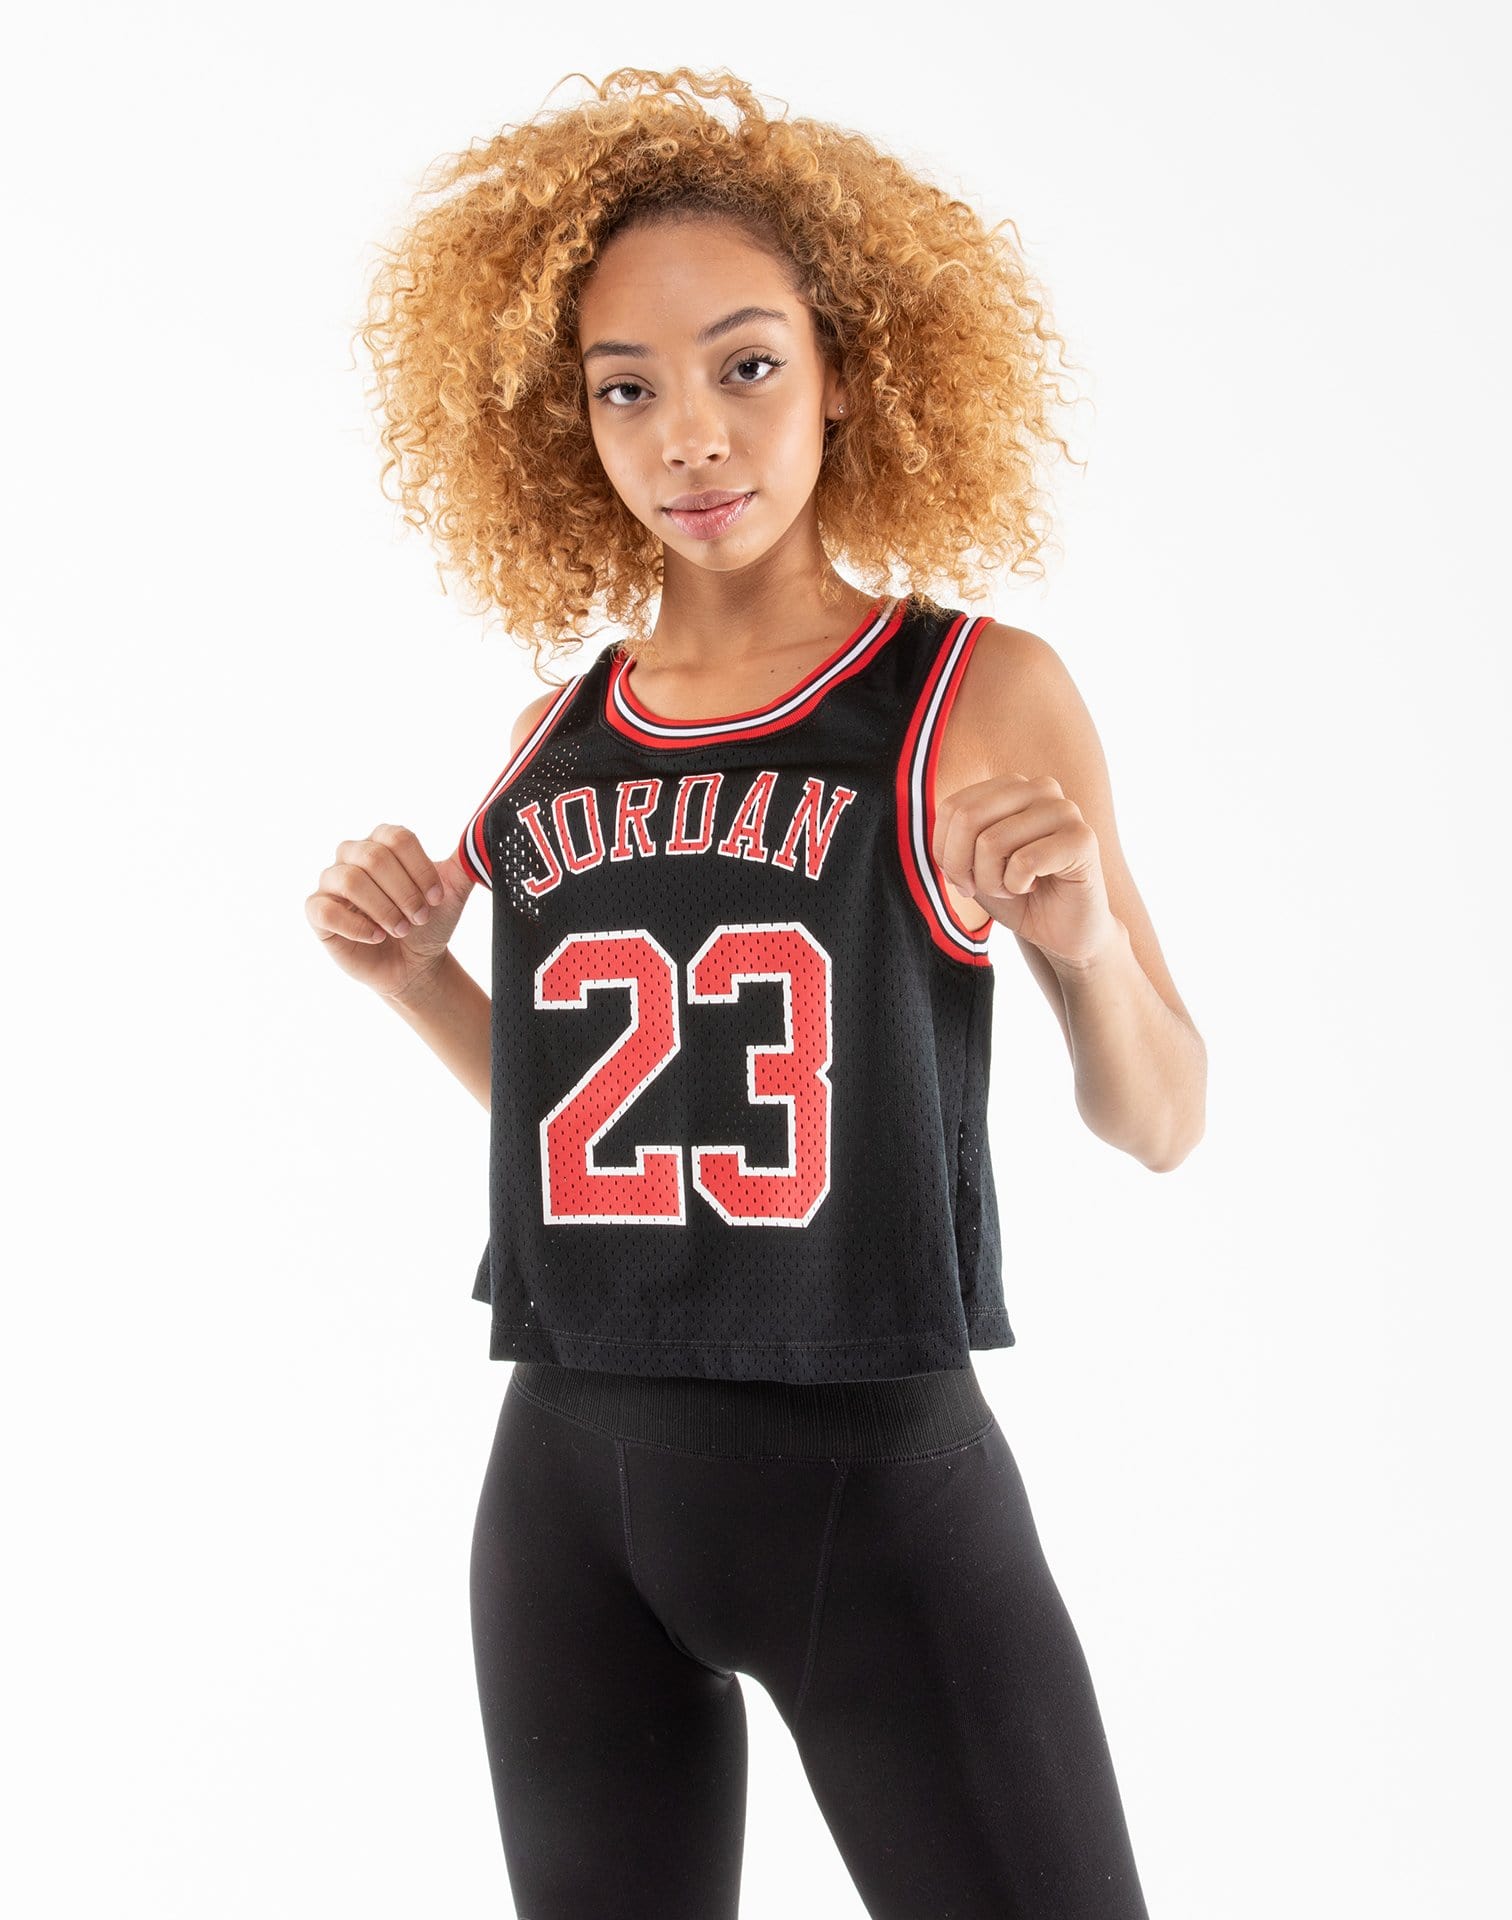 Nike Women's Jordan Essentials Jersey M